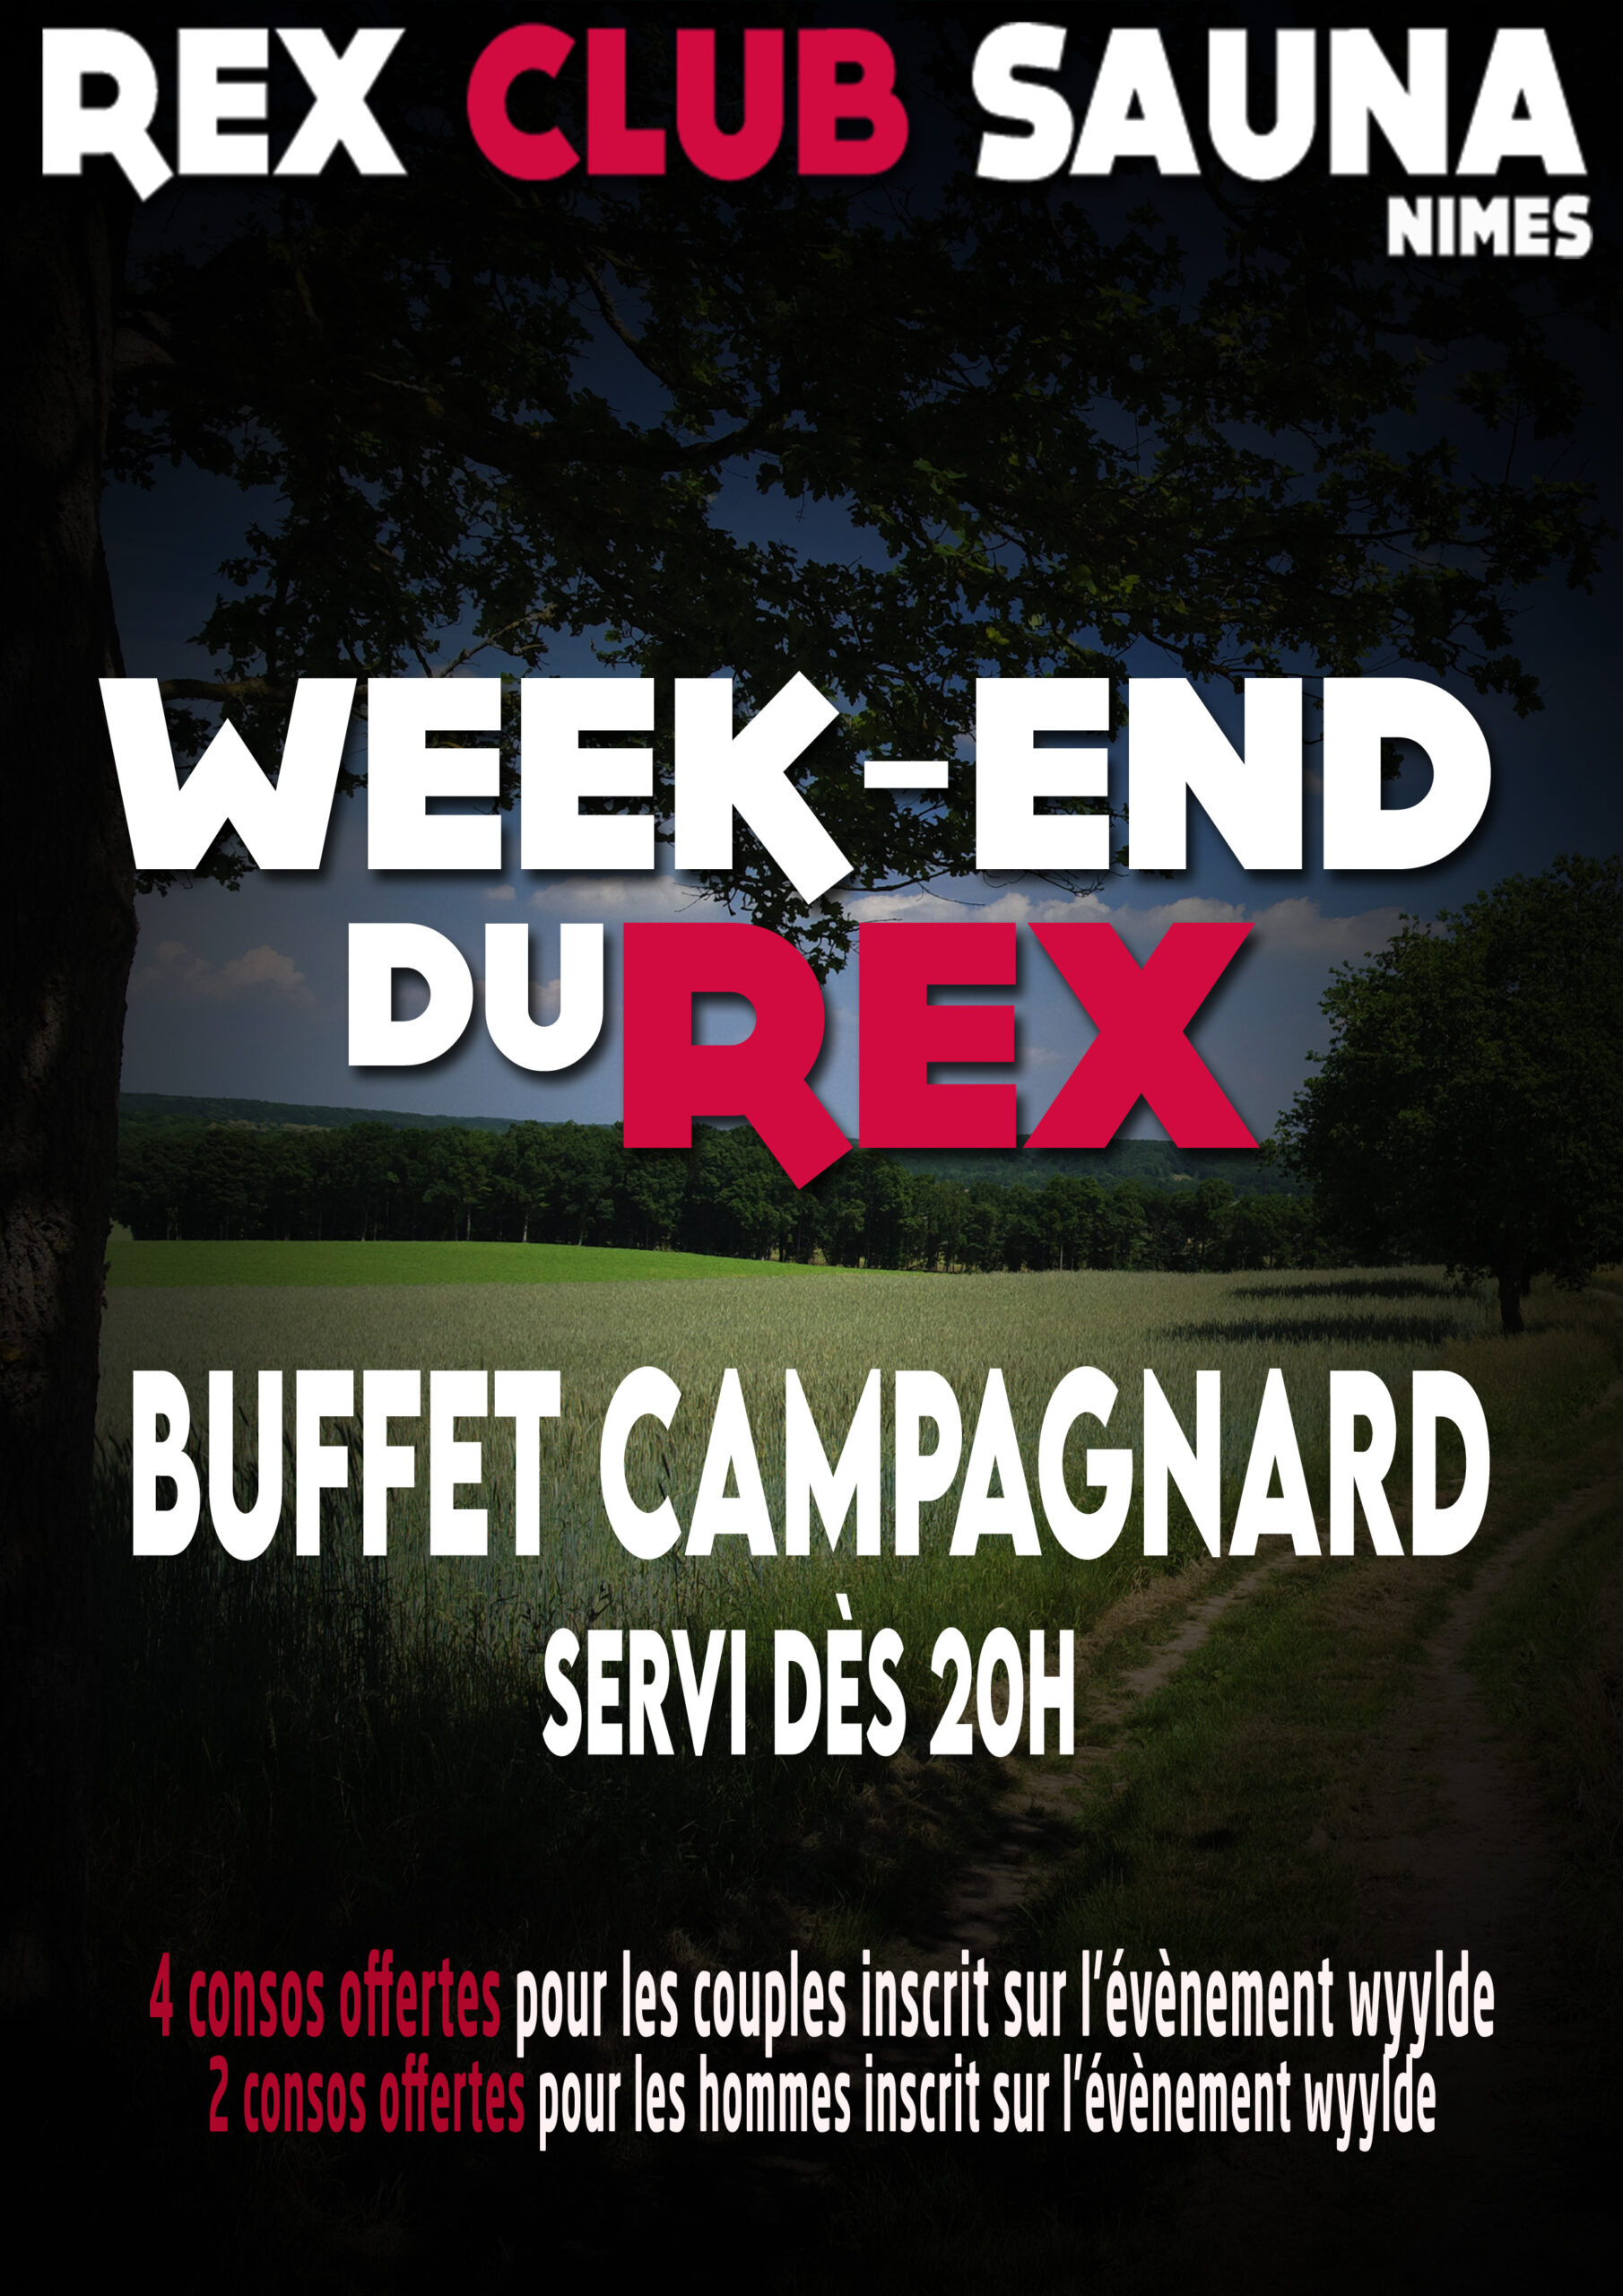 Week-end du Rex - Buffet campagnard @ Rex Club Sauna | Nîmes | Languedoc-Roussillon Midi-Pyrénées | France